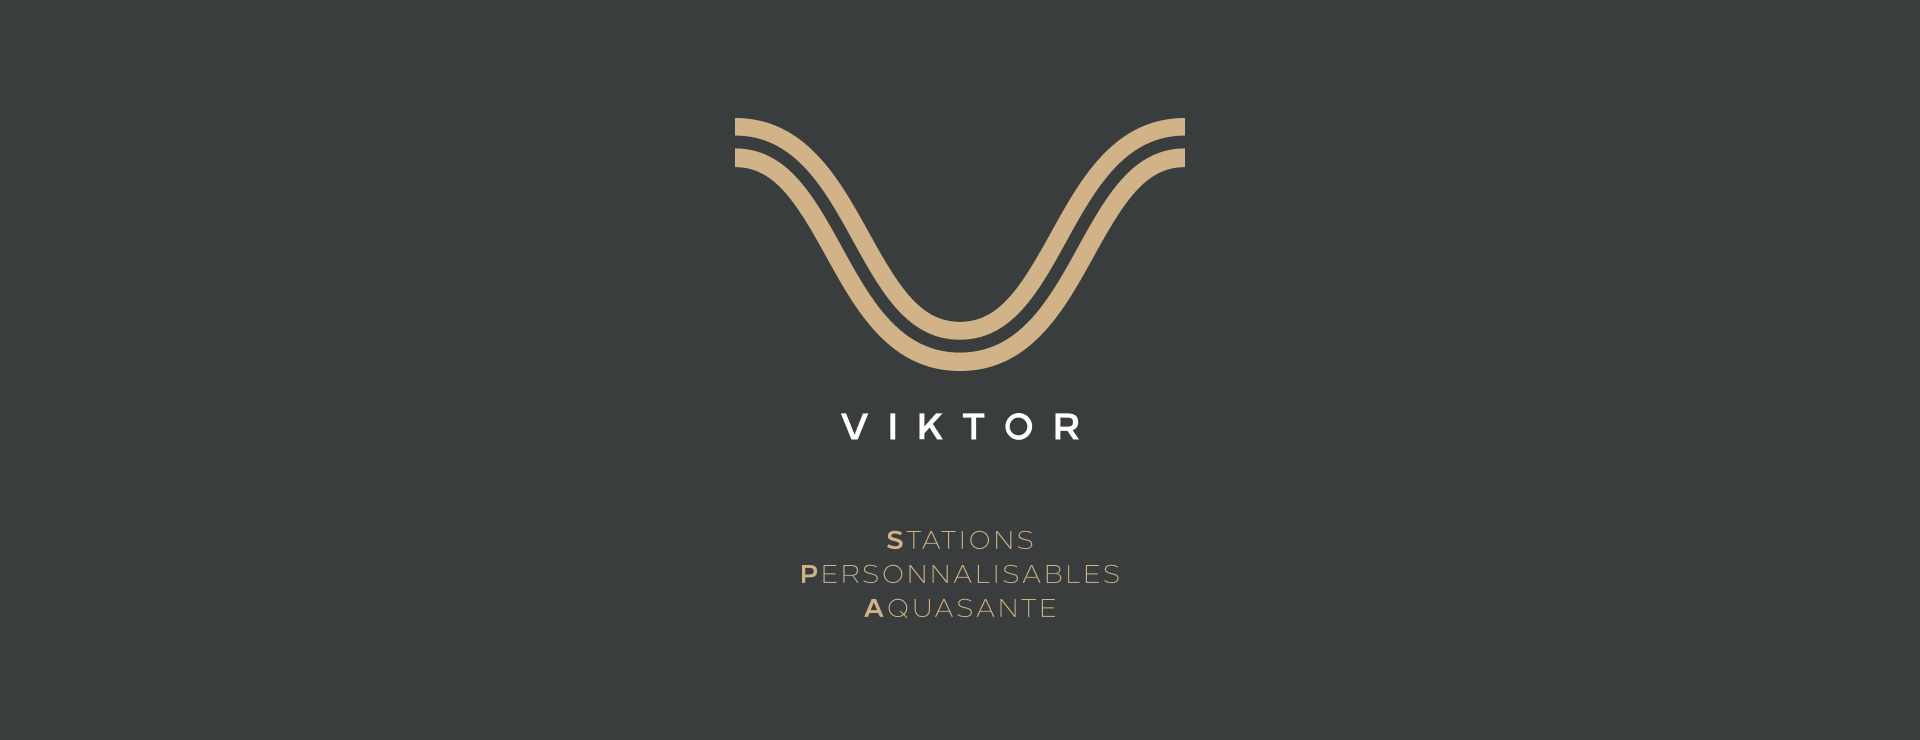 Logo VIKTOR - Stations Personnalisables Aquasanté